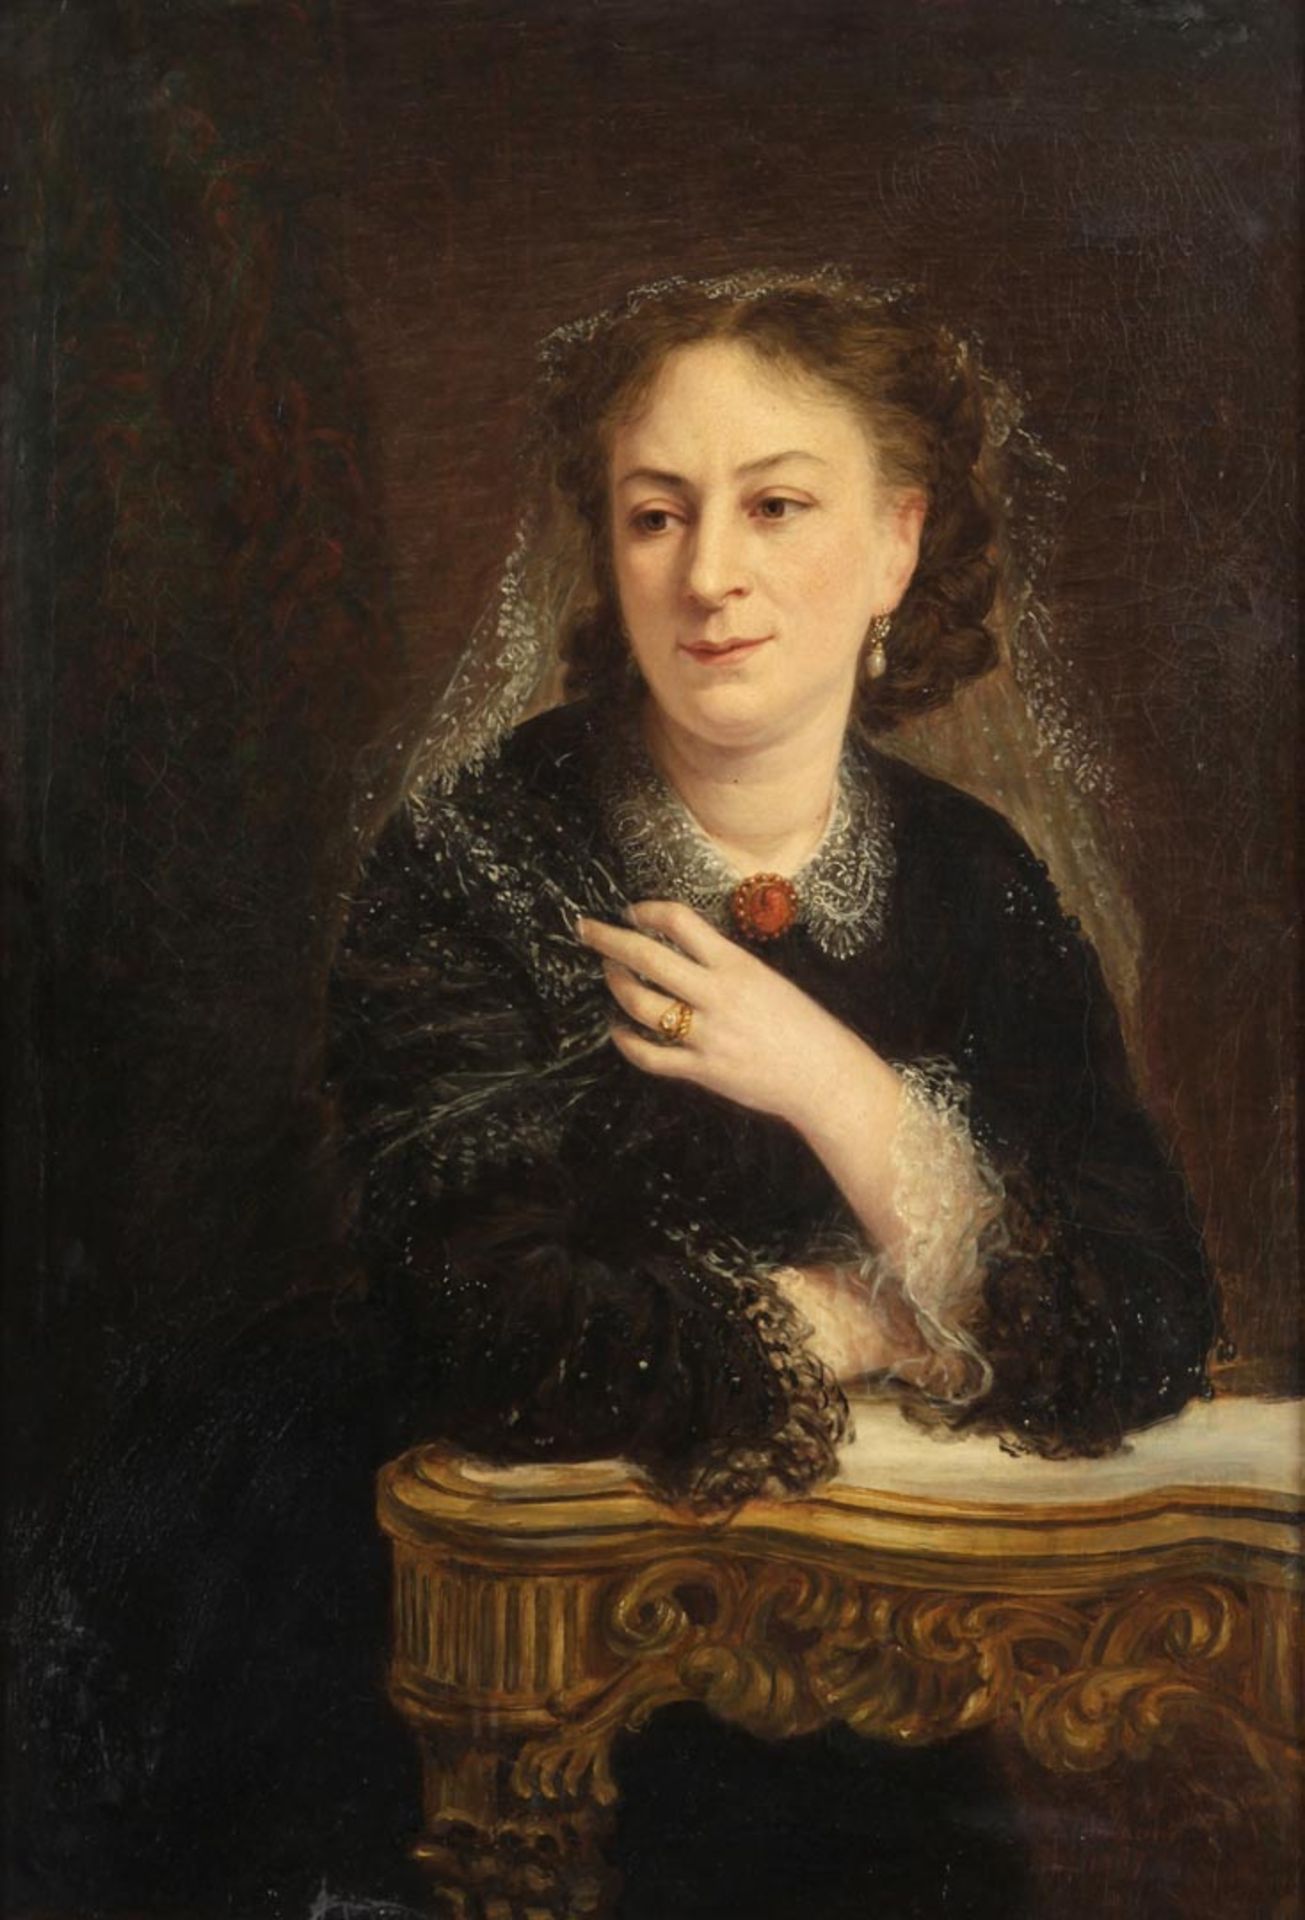 Amiconi, Bernardo 1825 Italien - c.1880 Portrait einer Dame m. Spitzenschleier u. Perlohrringen.- Öl